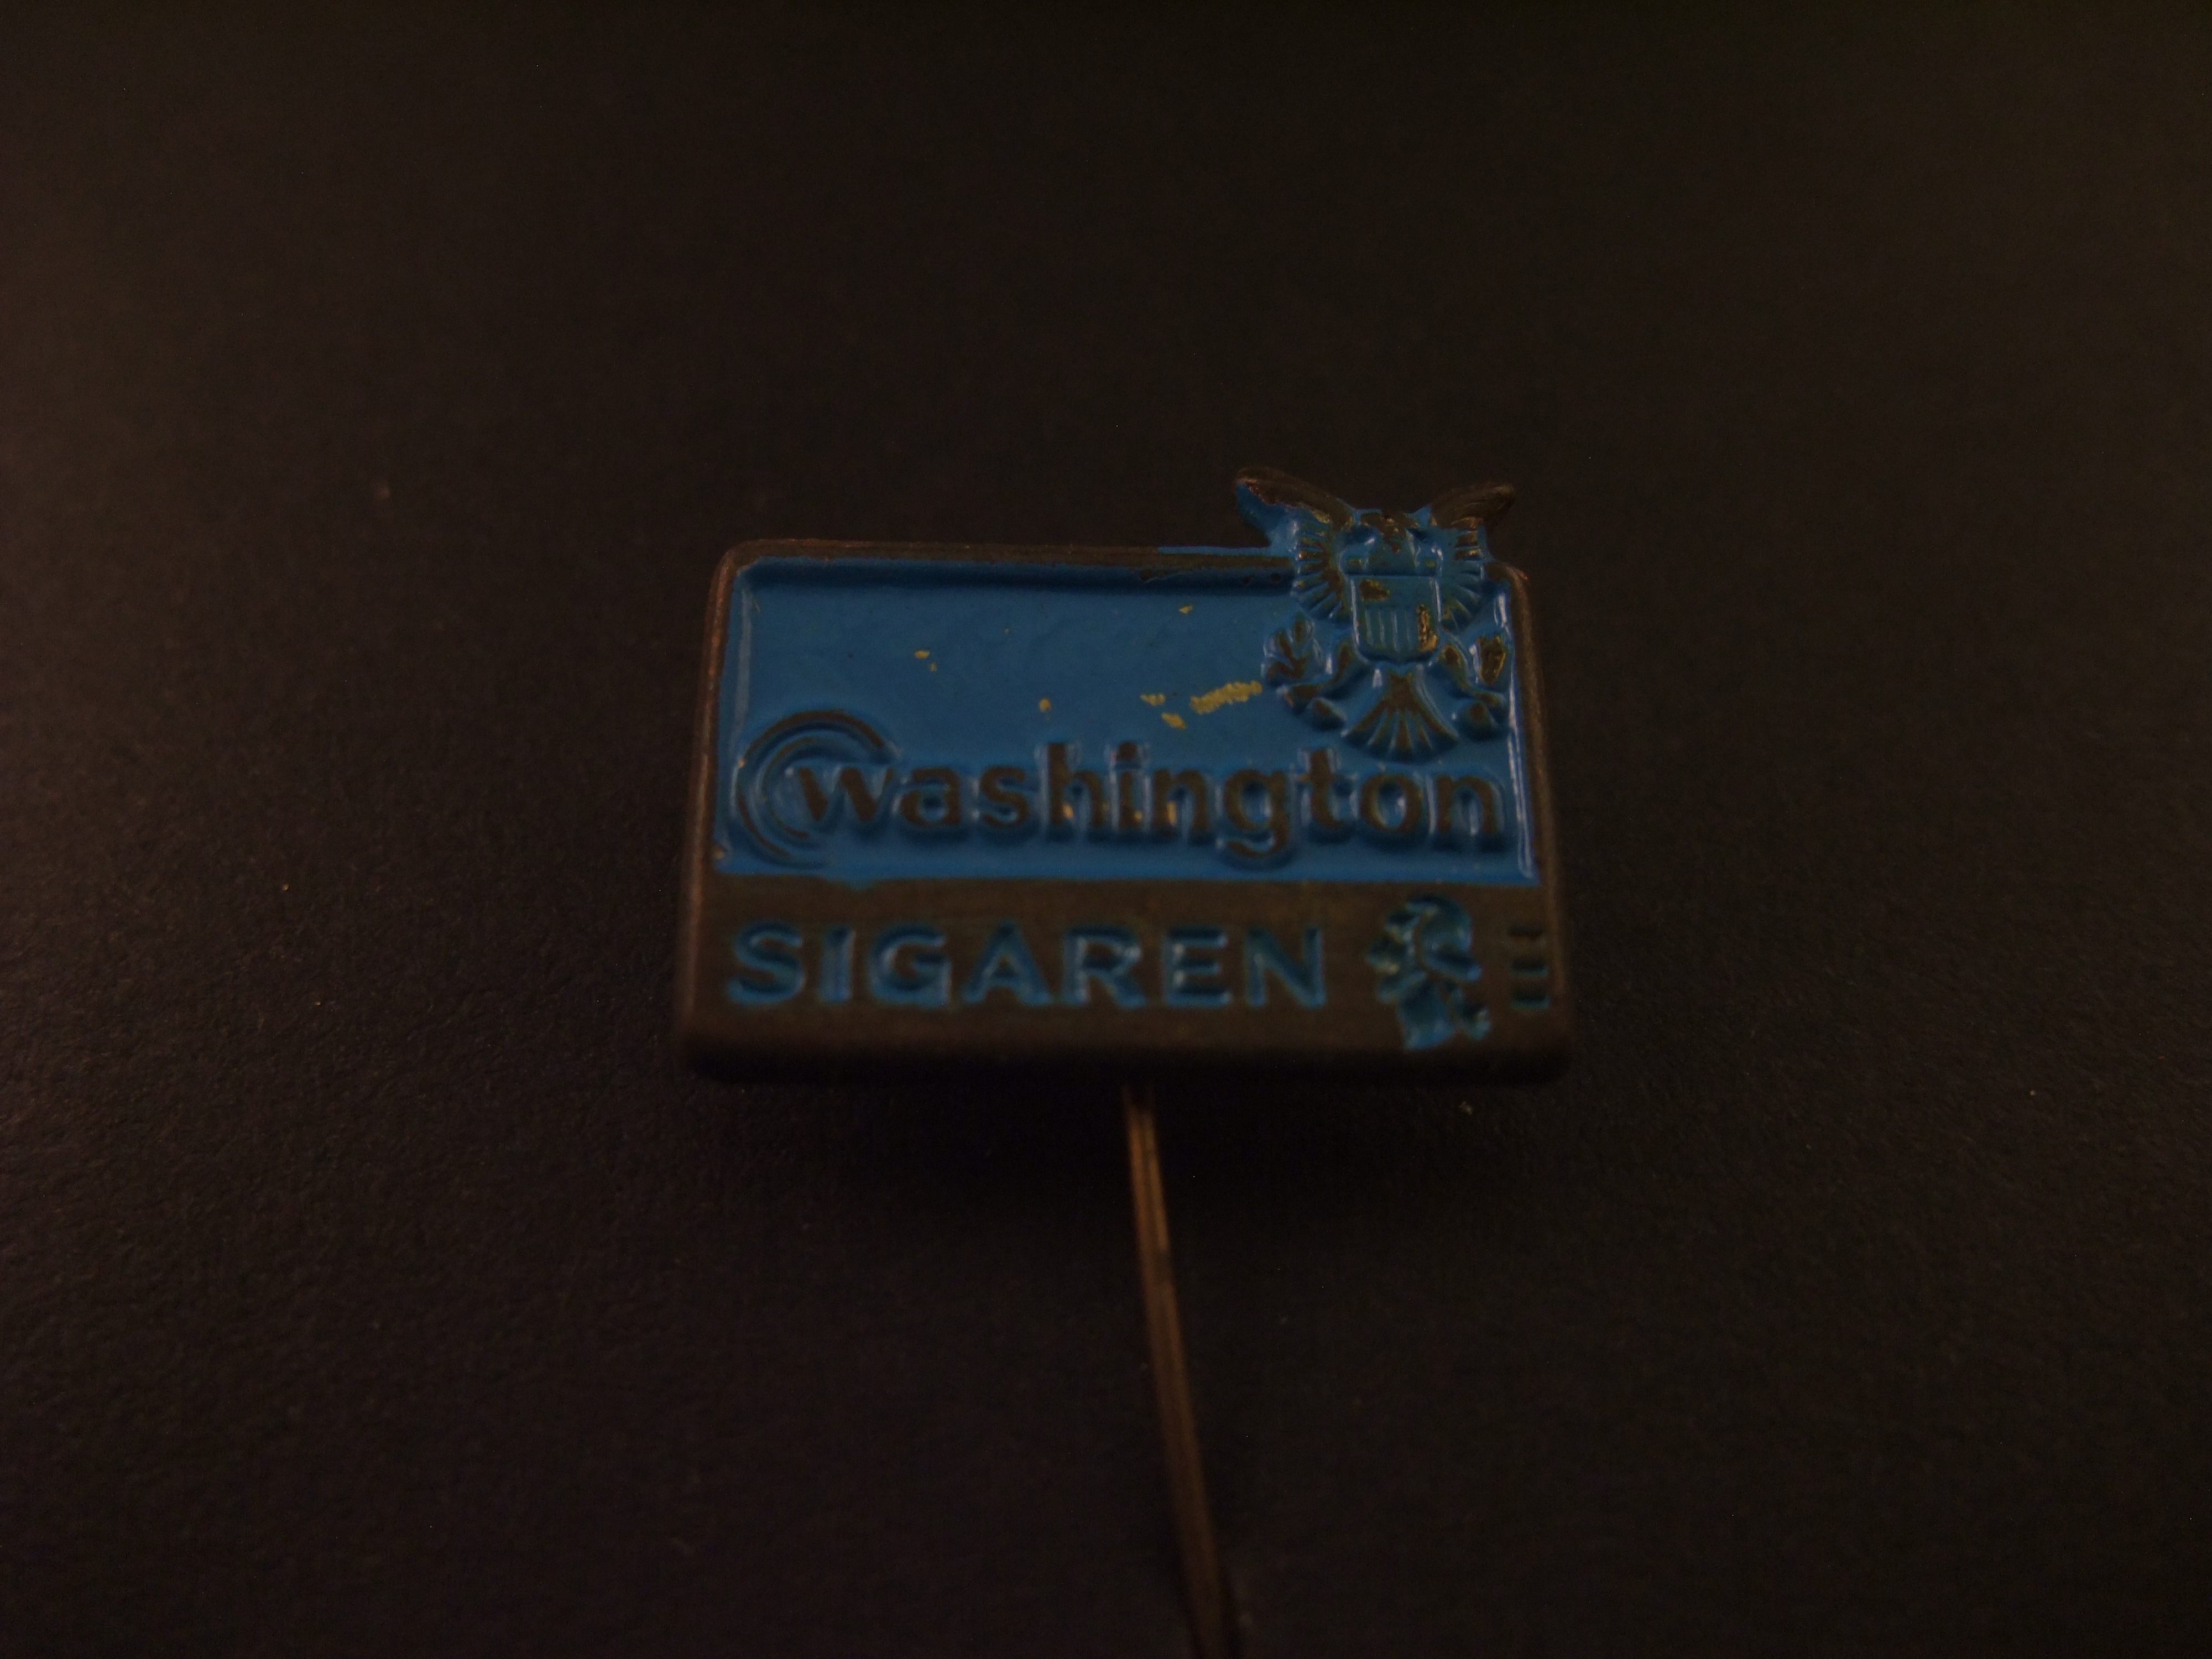 Sigarenfabriek Washington Baarn.( gematteerde sigaren) logo blauw